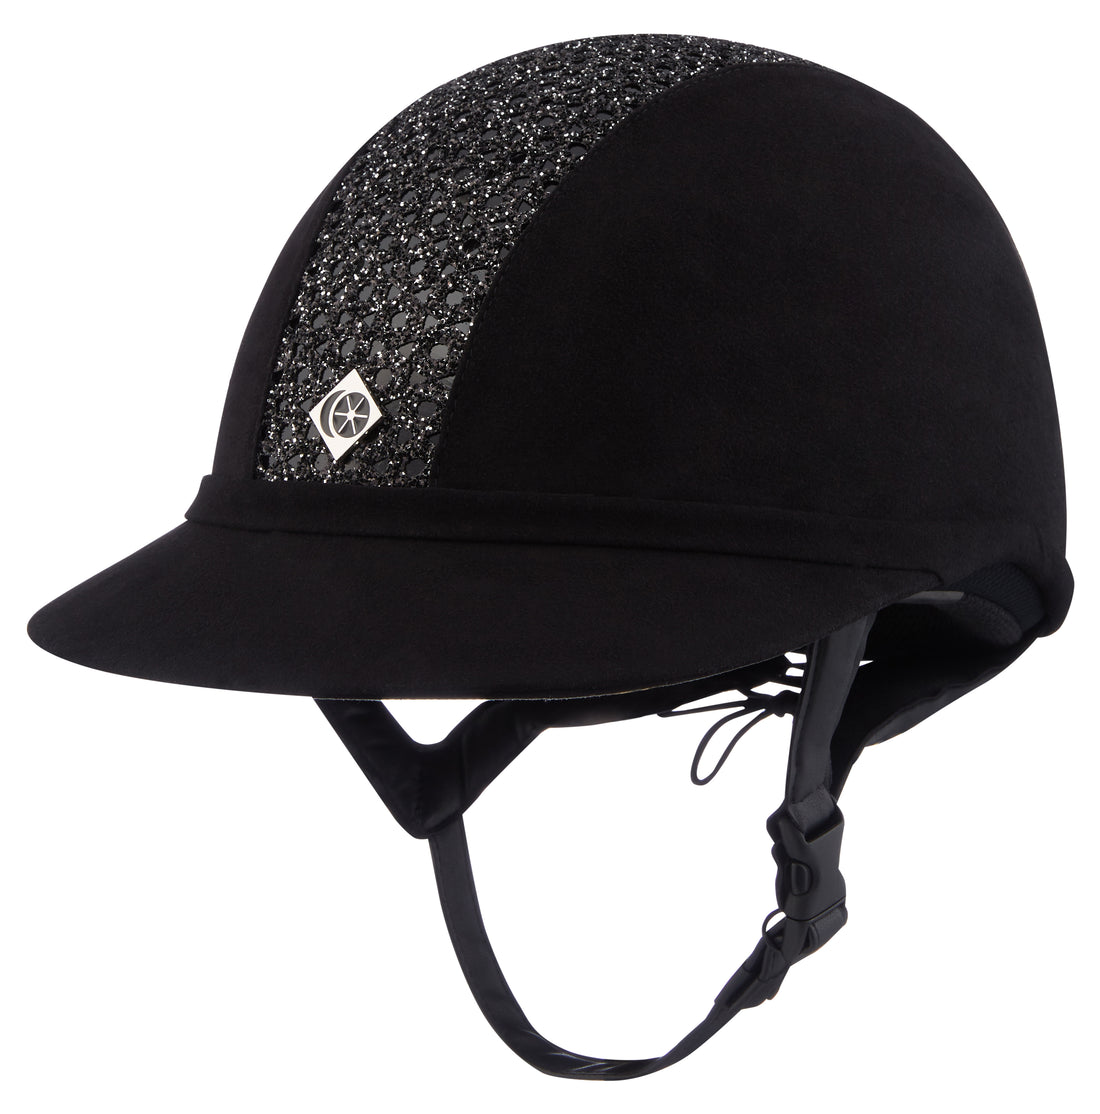 Charles Owen SP8 Plus - Riding Hat - Sparkly Black 